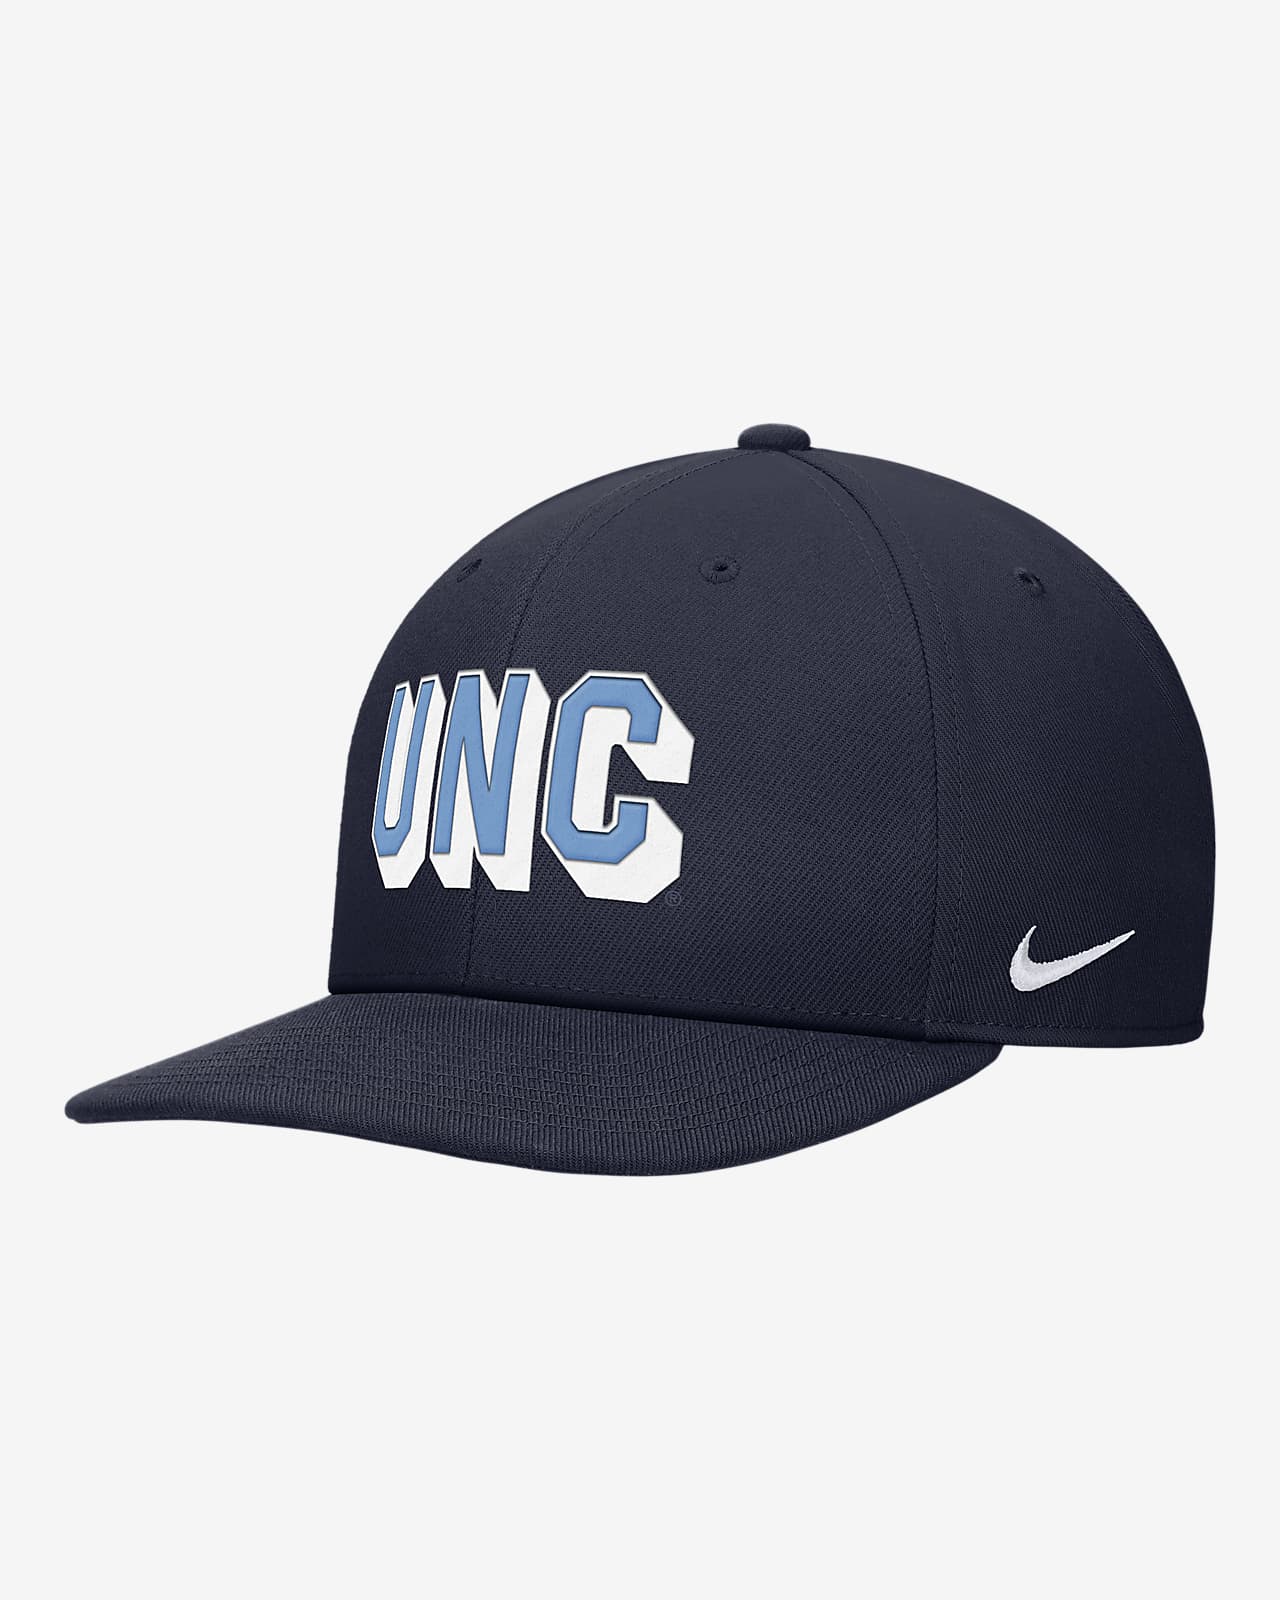 UNC Nike College Snapback Hat